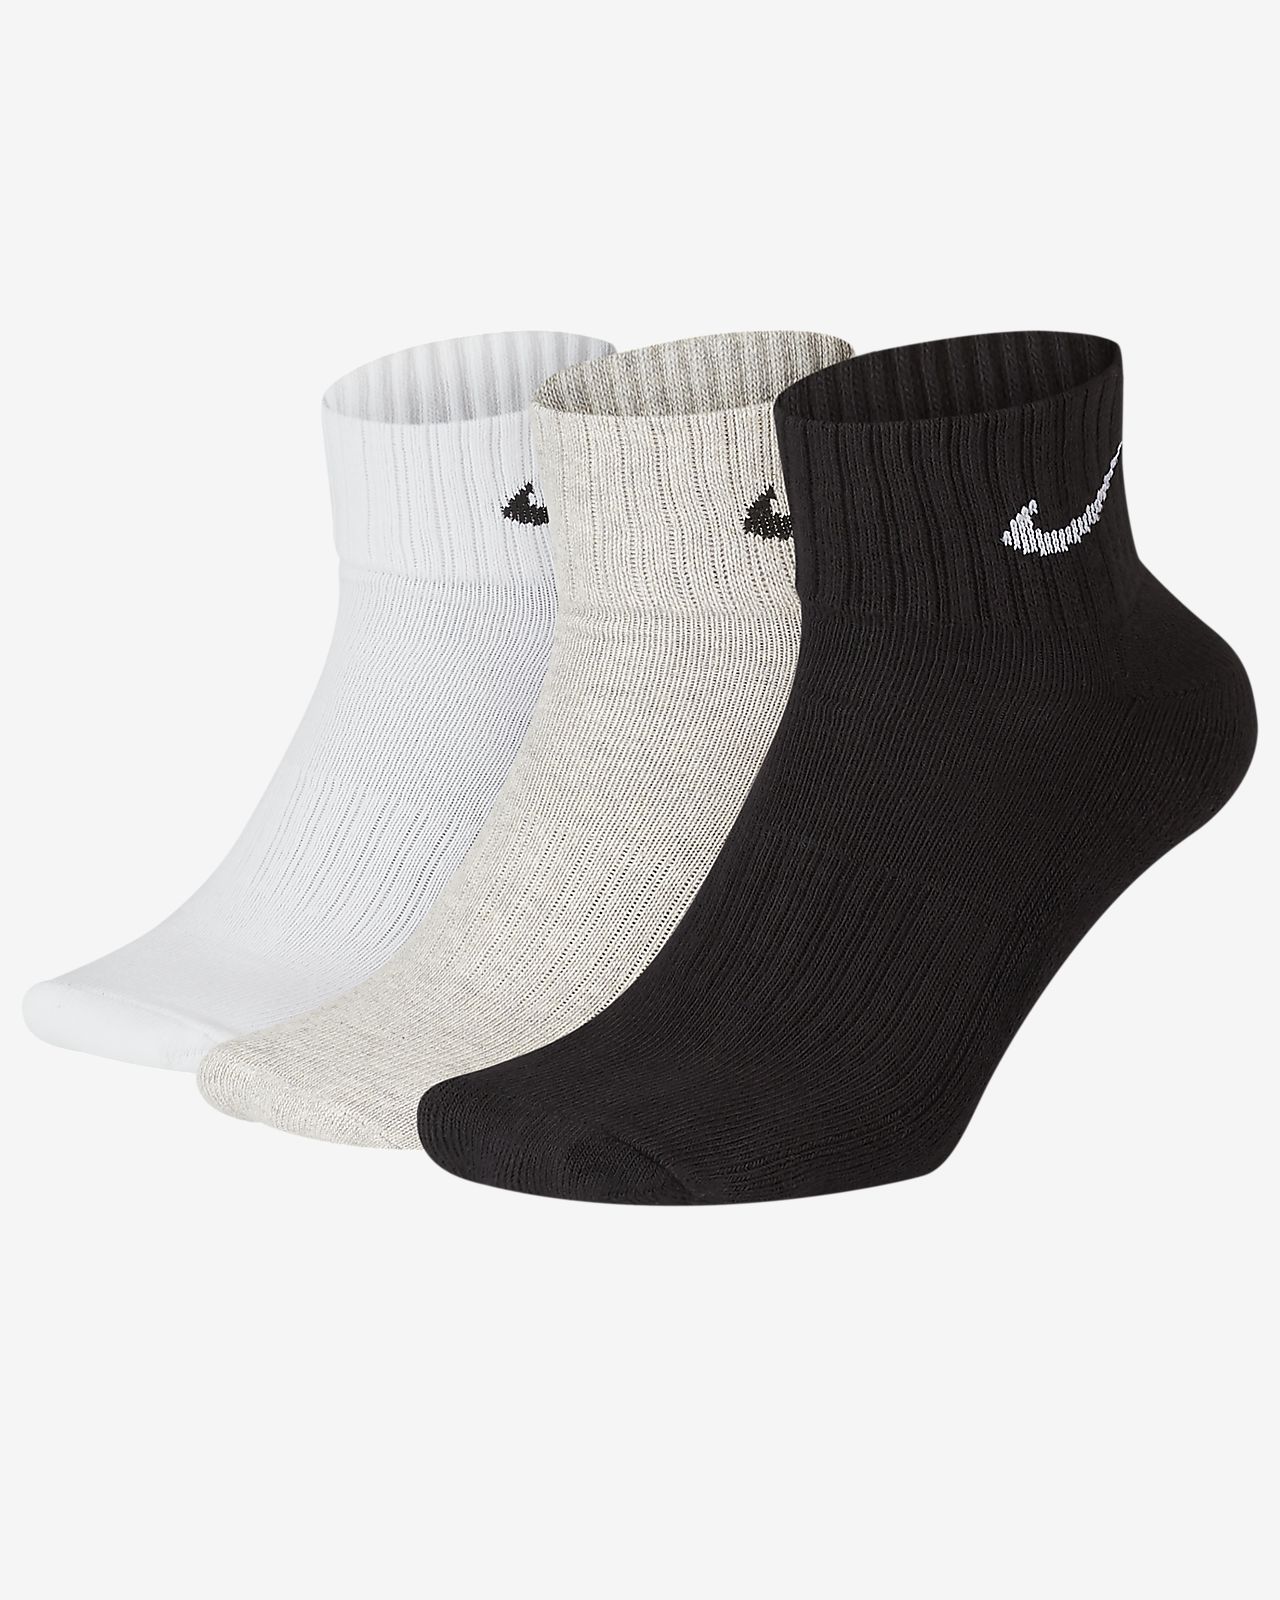 Nike Cushion Training Ankle Socks (3 